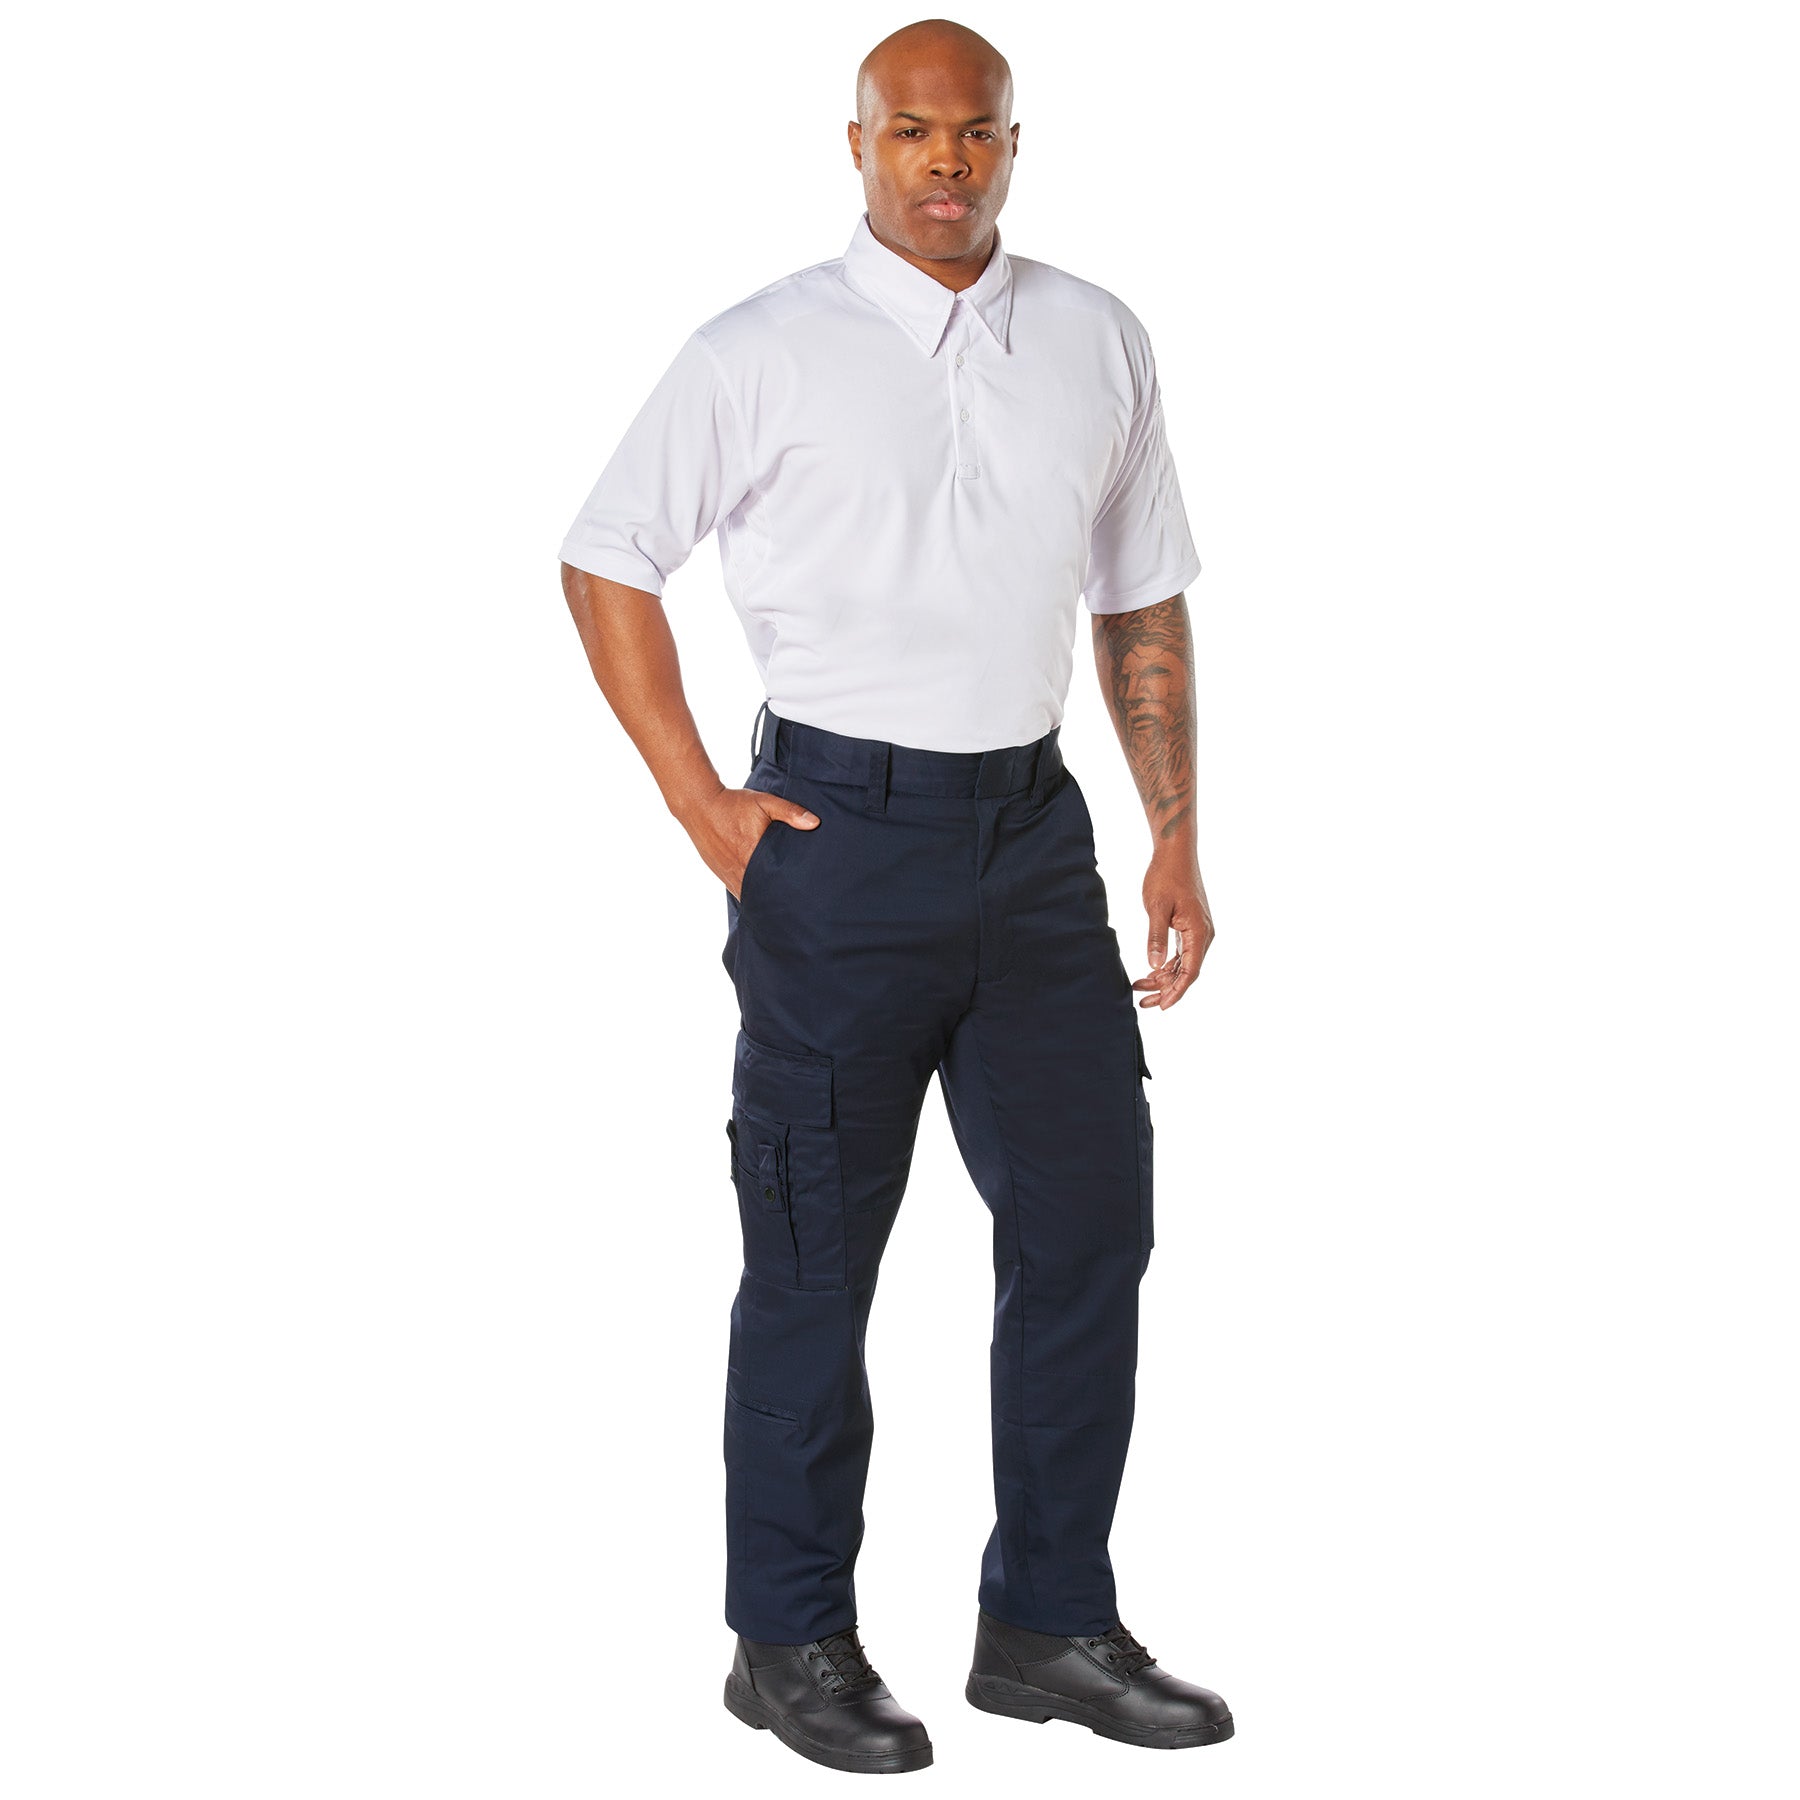 [Public Safety] Poly/Cotton Deluxe EMT Tactical Pants Navy Blue